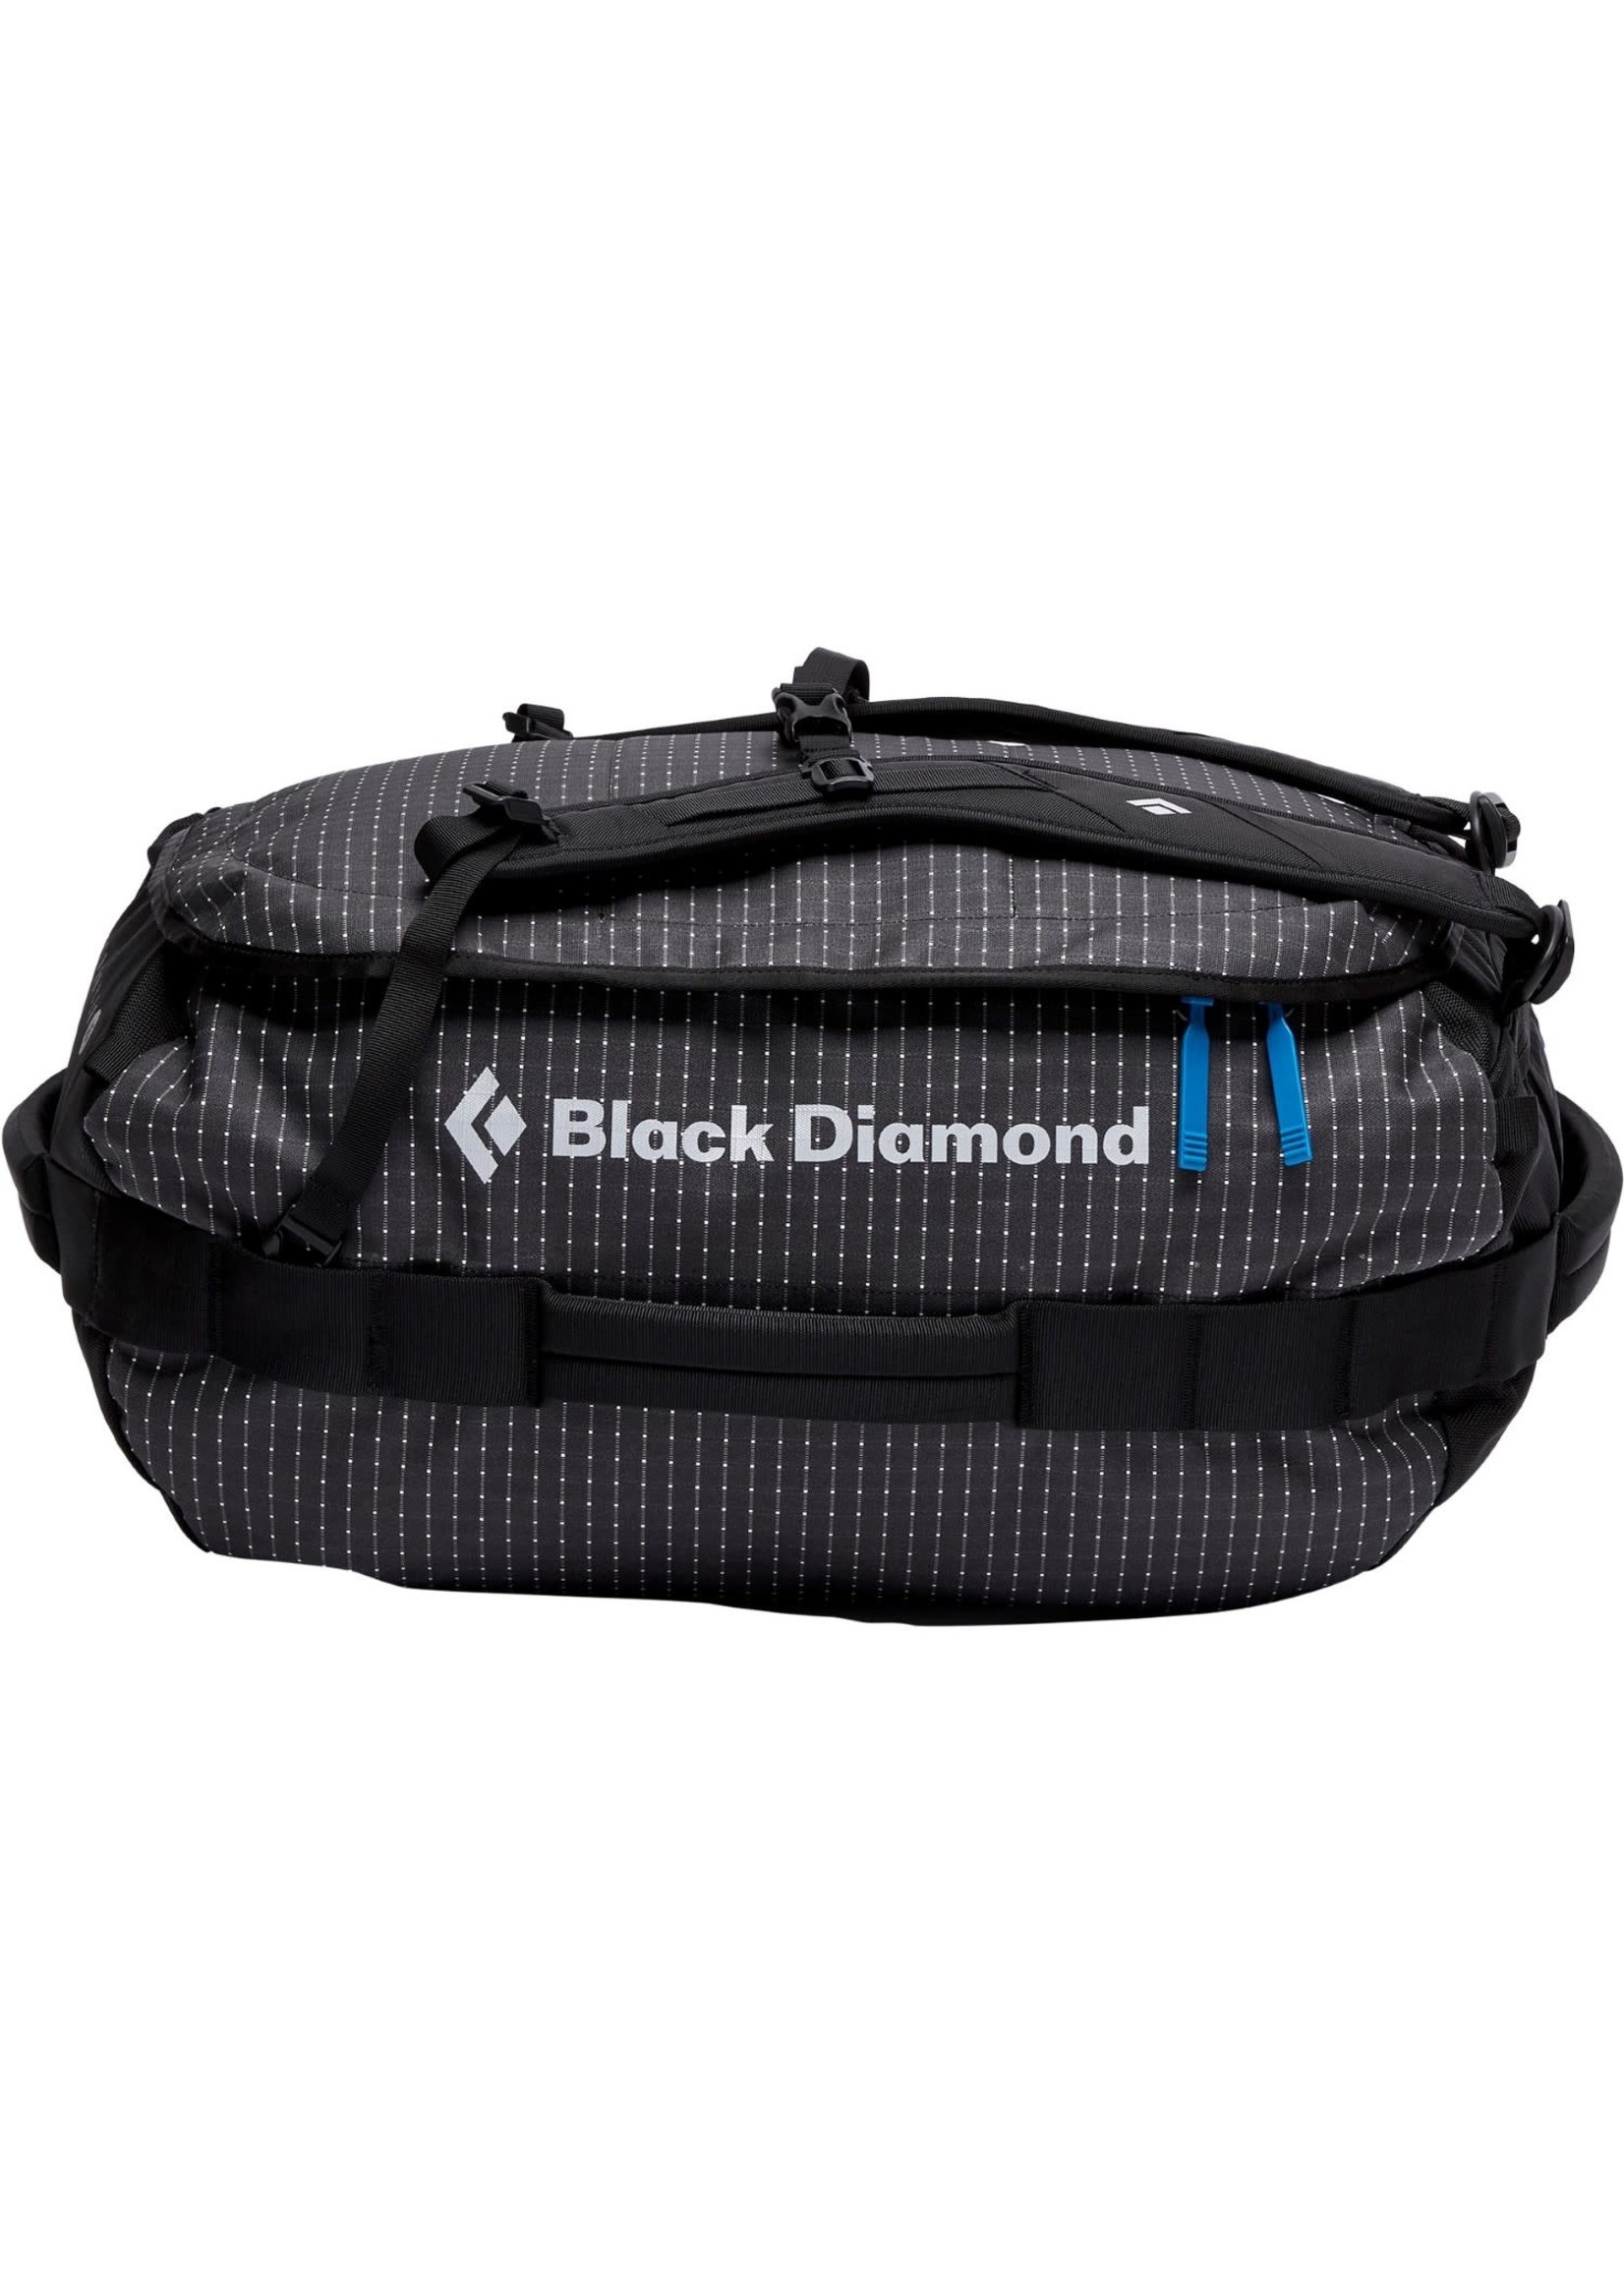 Black Diamond Black Diamond Stonehauler 45 L Duffel